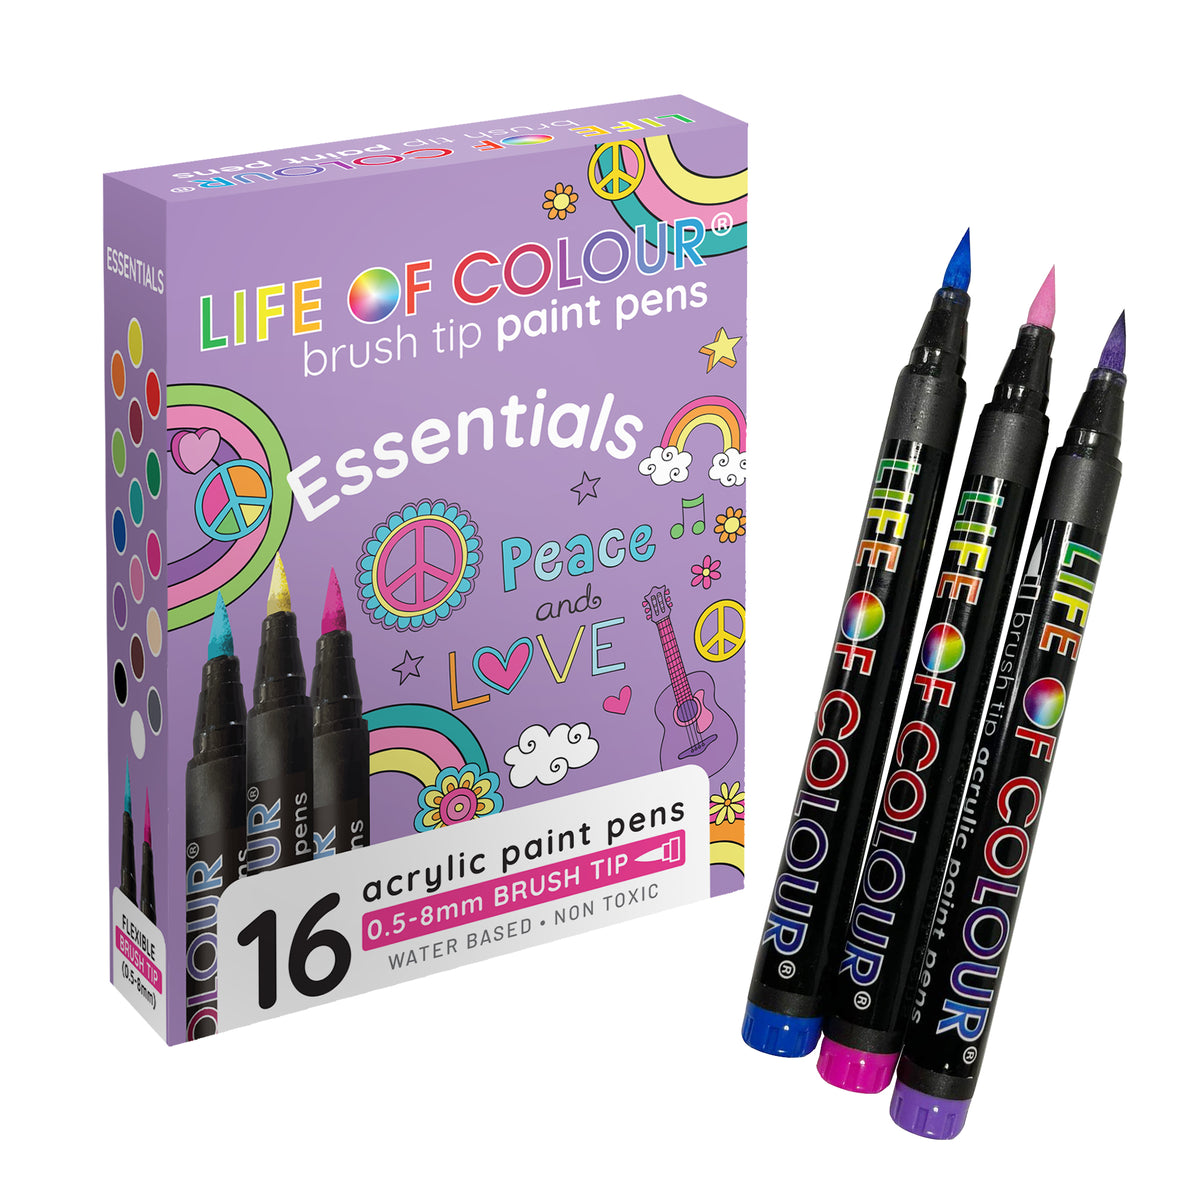 Essential Colours Brush Tip Acrylic Paint Pens - Set of 16 - Life of Colour